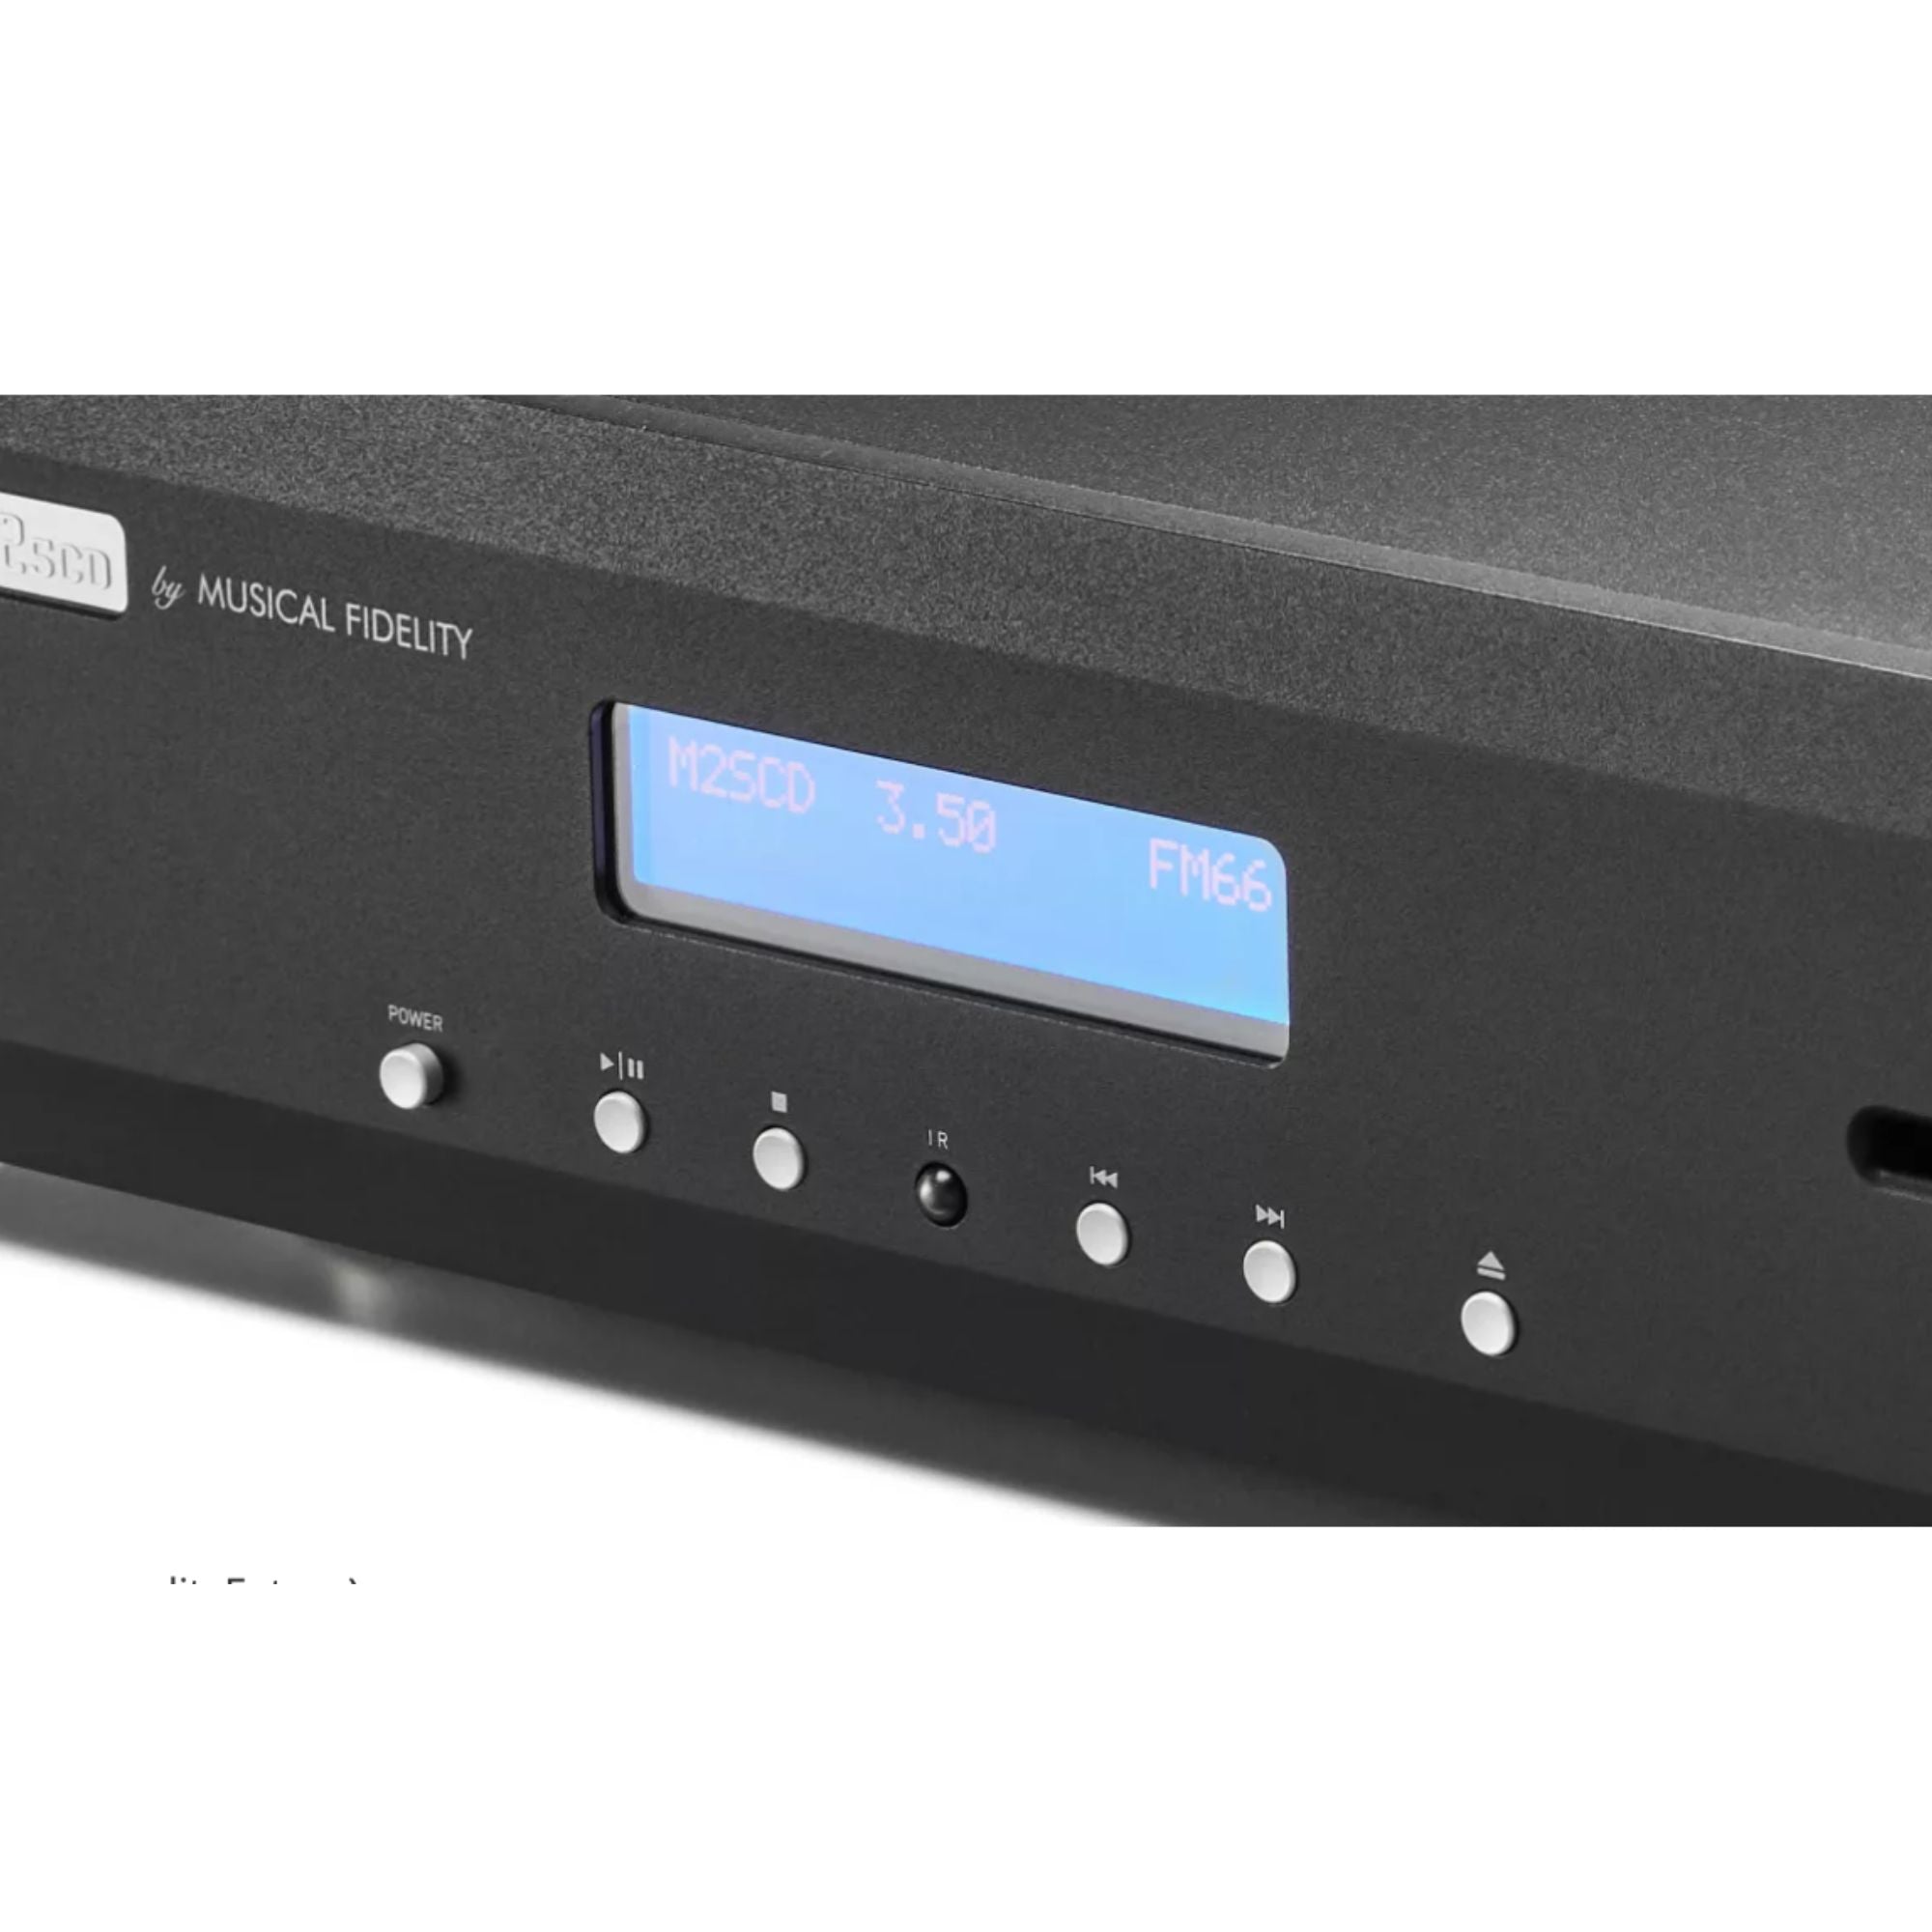 Musical Fidelity M2scd - CD Player, Musical Fidelity, CD Player - AVStore.in